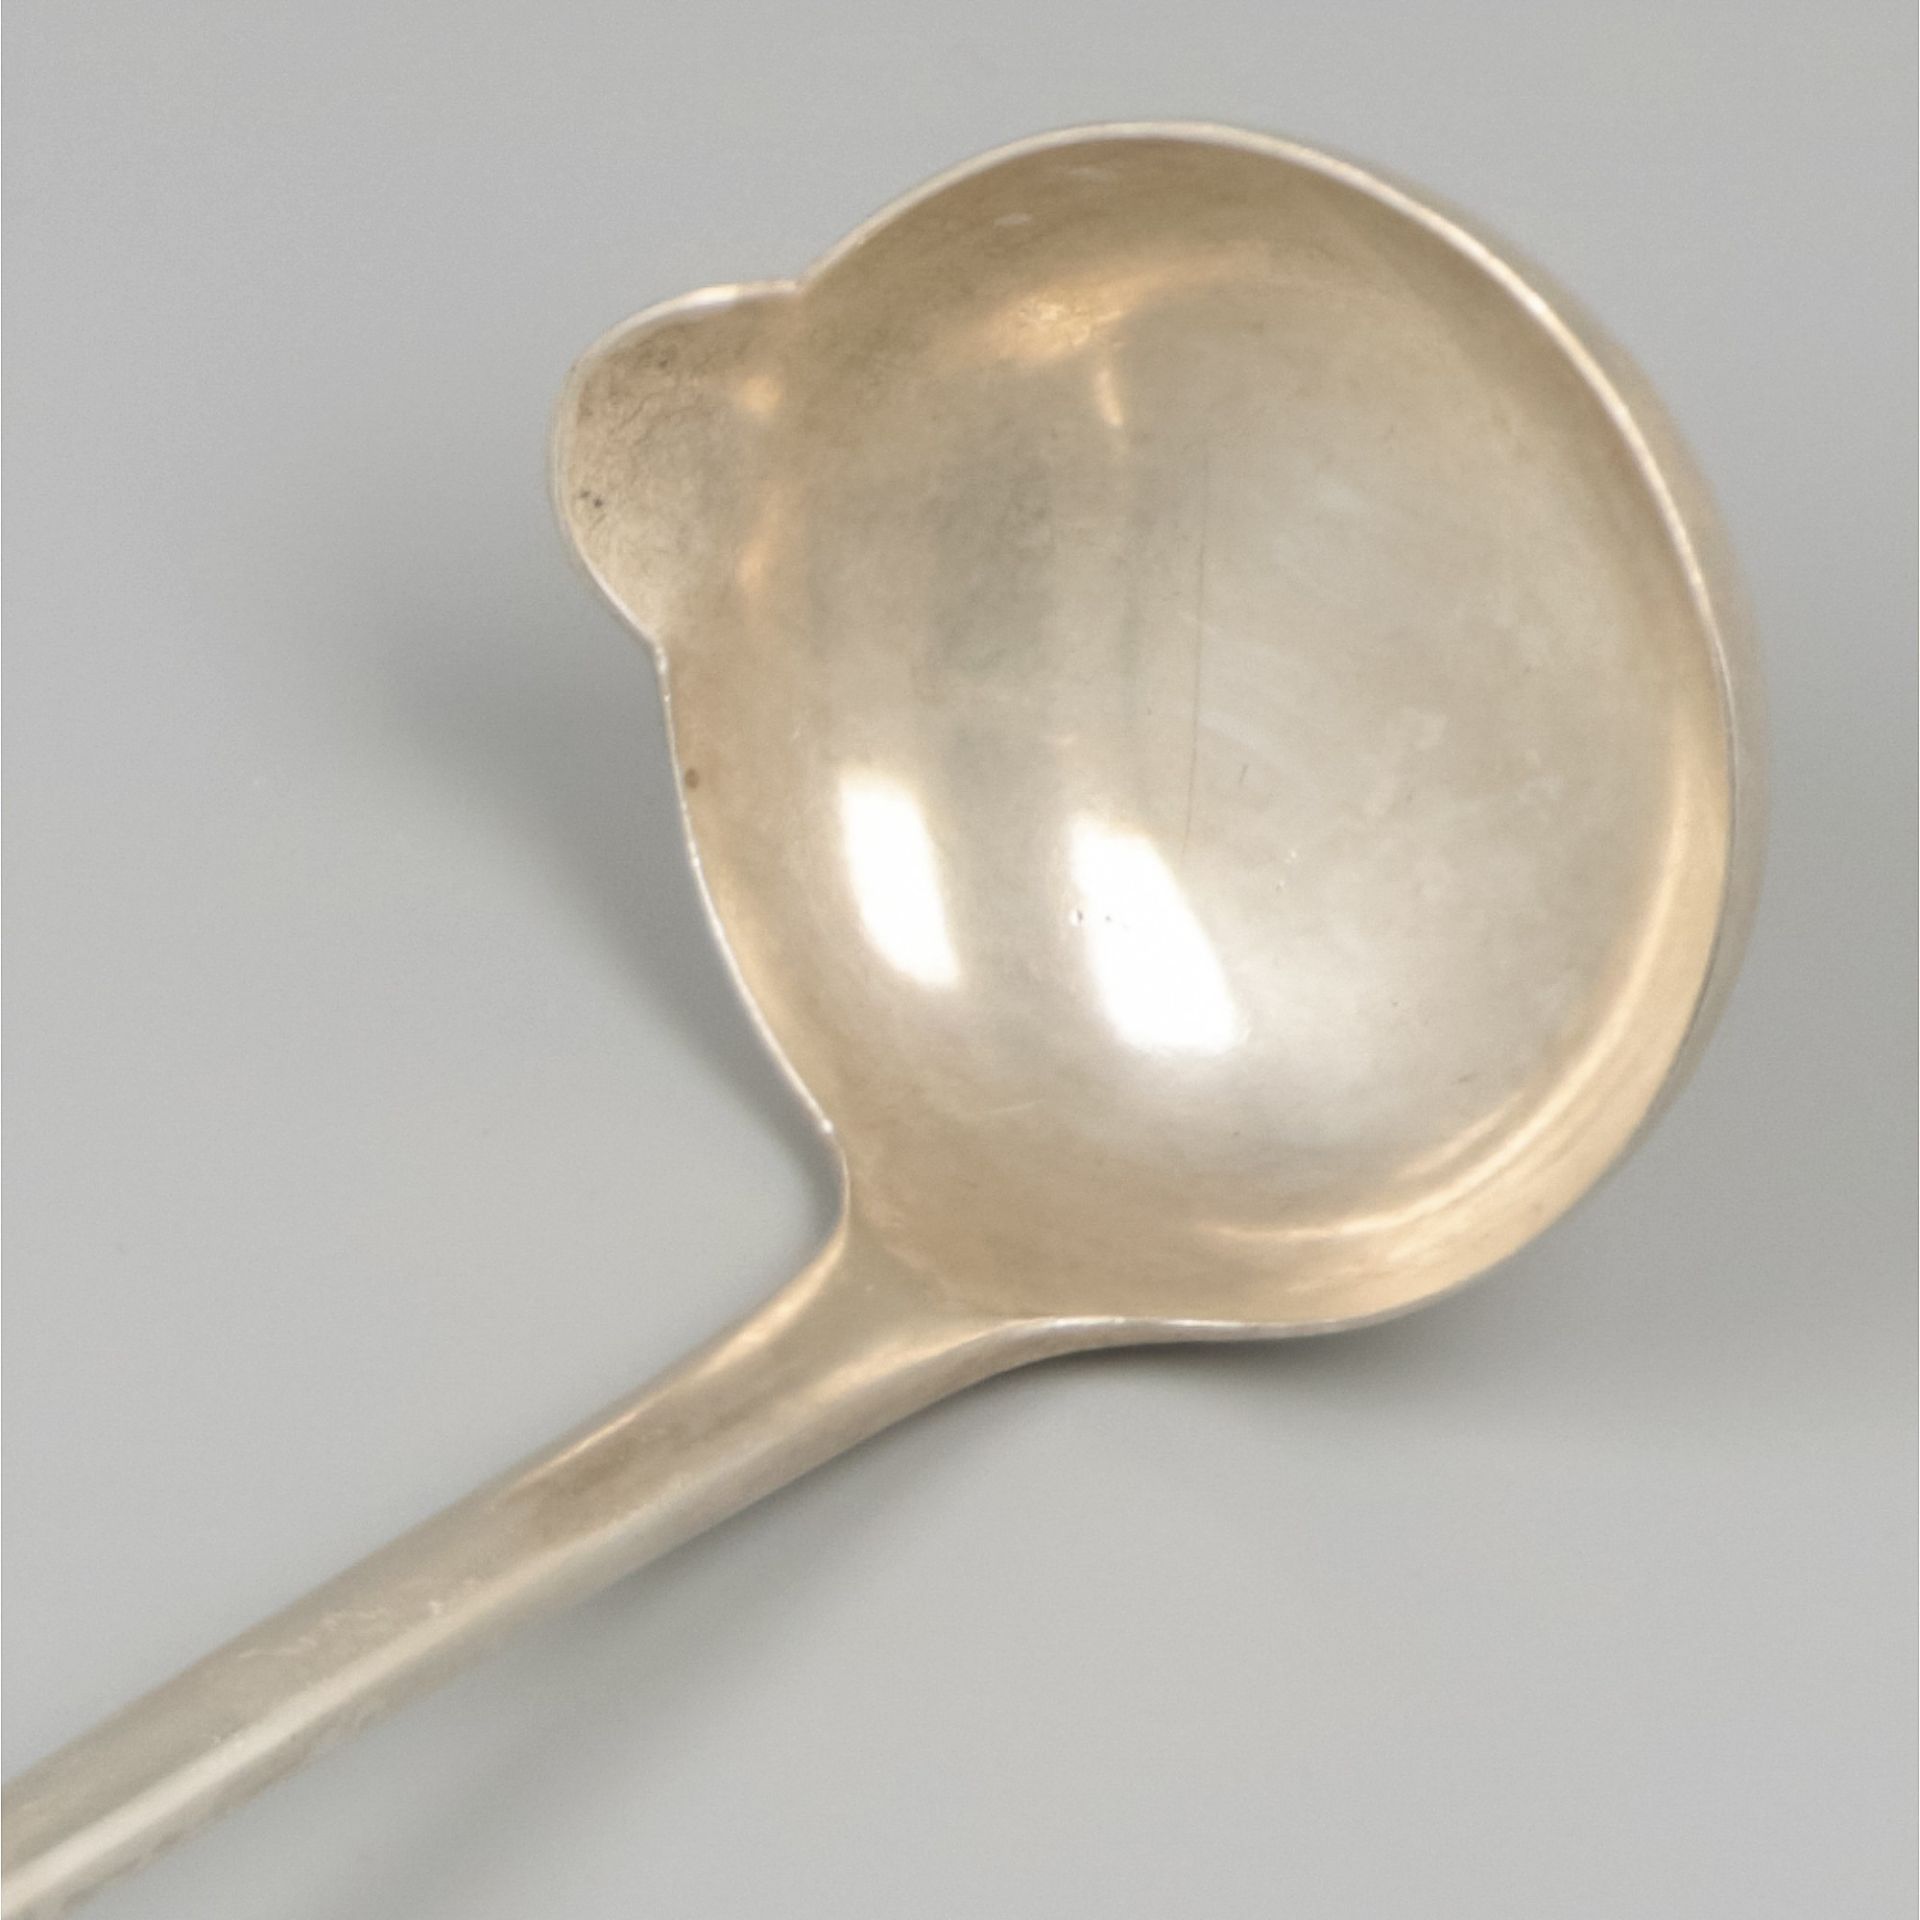 Punchbowl spoon silver. - Bild 3 aus 5